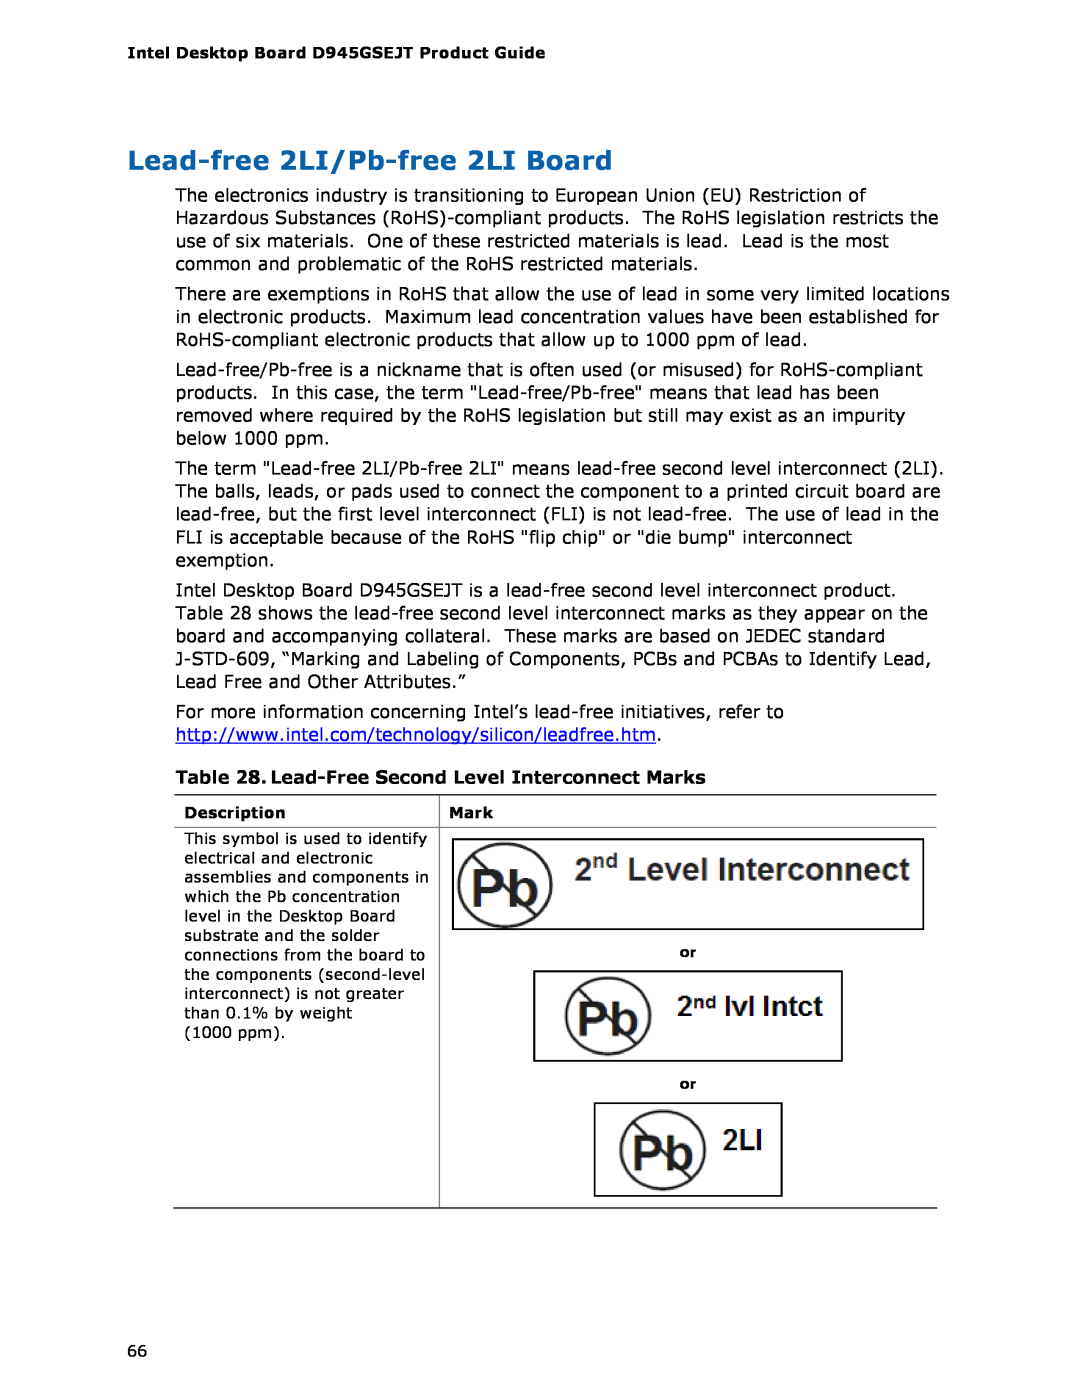 Intel manual Lead-free 2LI/Pb-free2LI Board, Intel Desktop Board D945GSEJT Product Guide, Description, Mark 